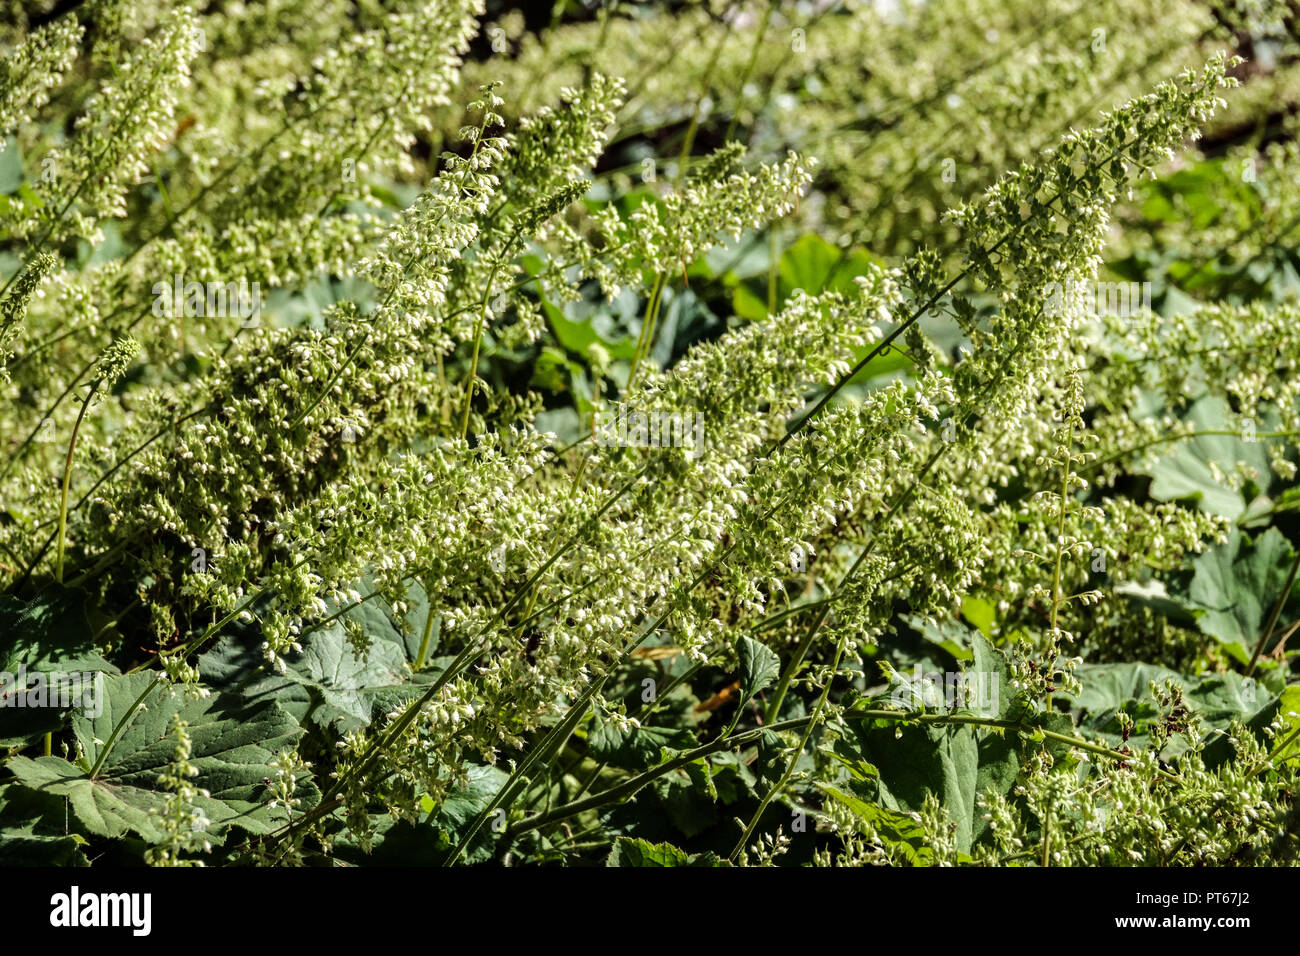 Haarige Alumroot Heuchera villosa „Macrorhiza“ Heuchera Blumen Heuchera villosa Oktober blühende mehrjährige Pflanze Blumenpflanzen Dekoratives Grün weiß Stockfoto